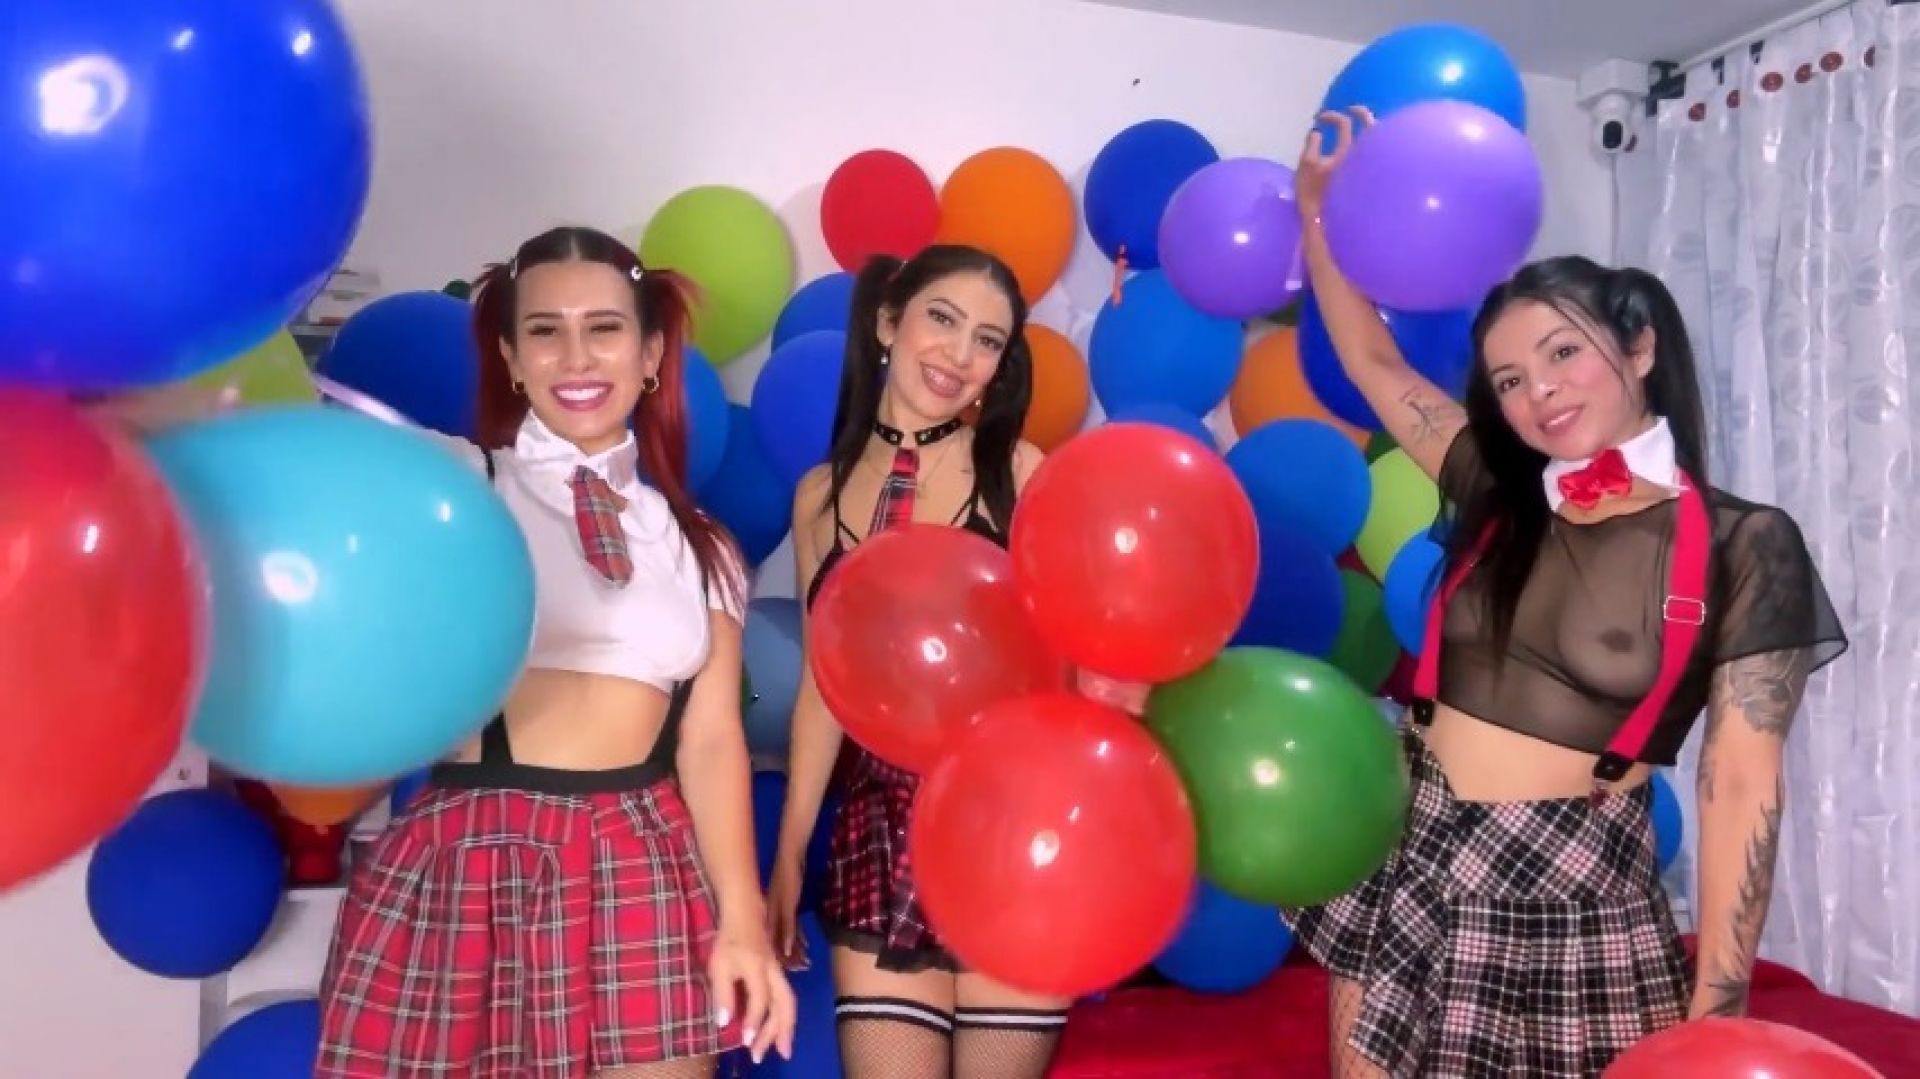 Three schoolgirls having fun with balloons